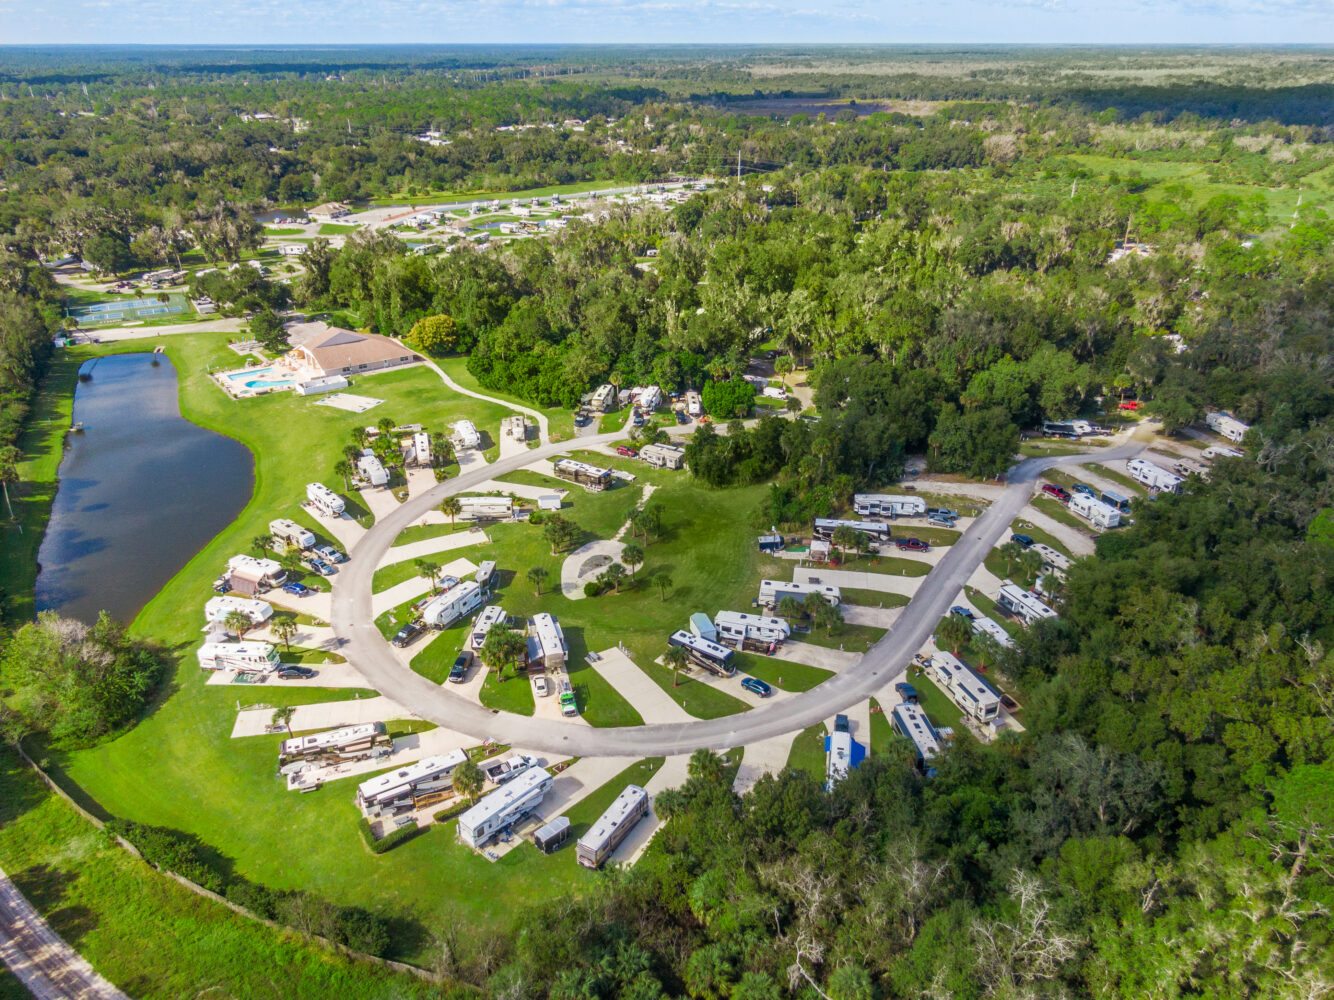 Seasons in the Sun RV Resort Aerial View